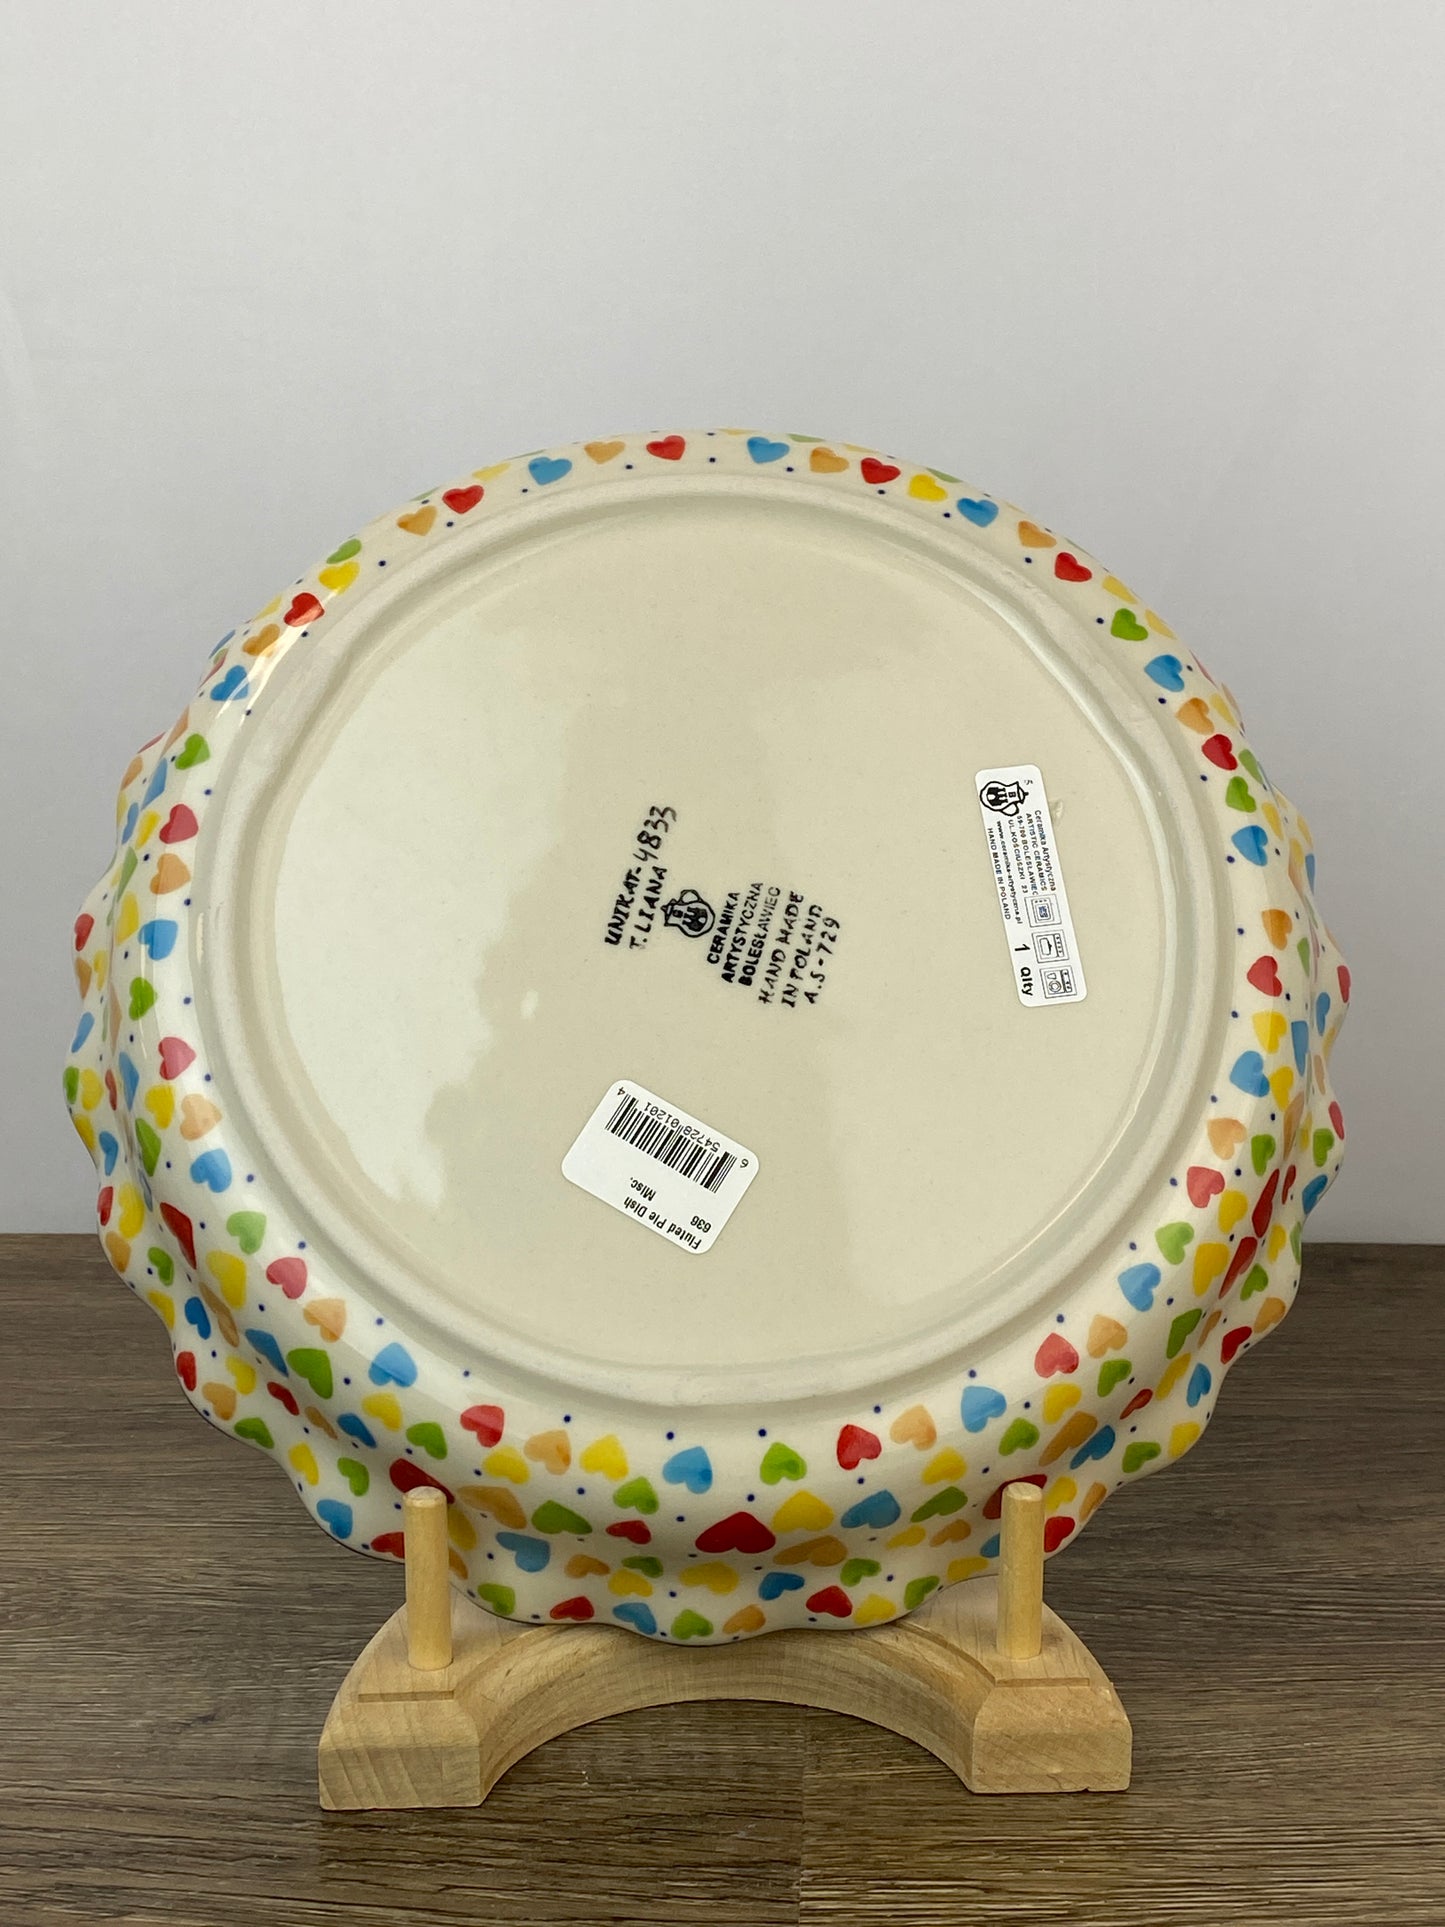 SALE Ruffled Unikat Pie Plate / Round Baker - Shape 636 - Pattern U4833